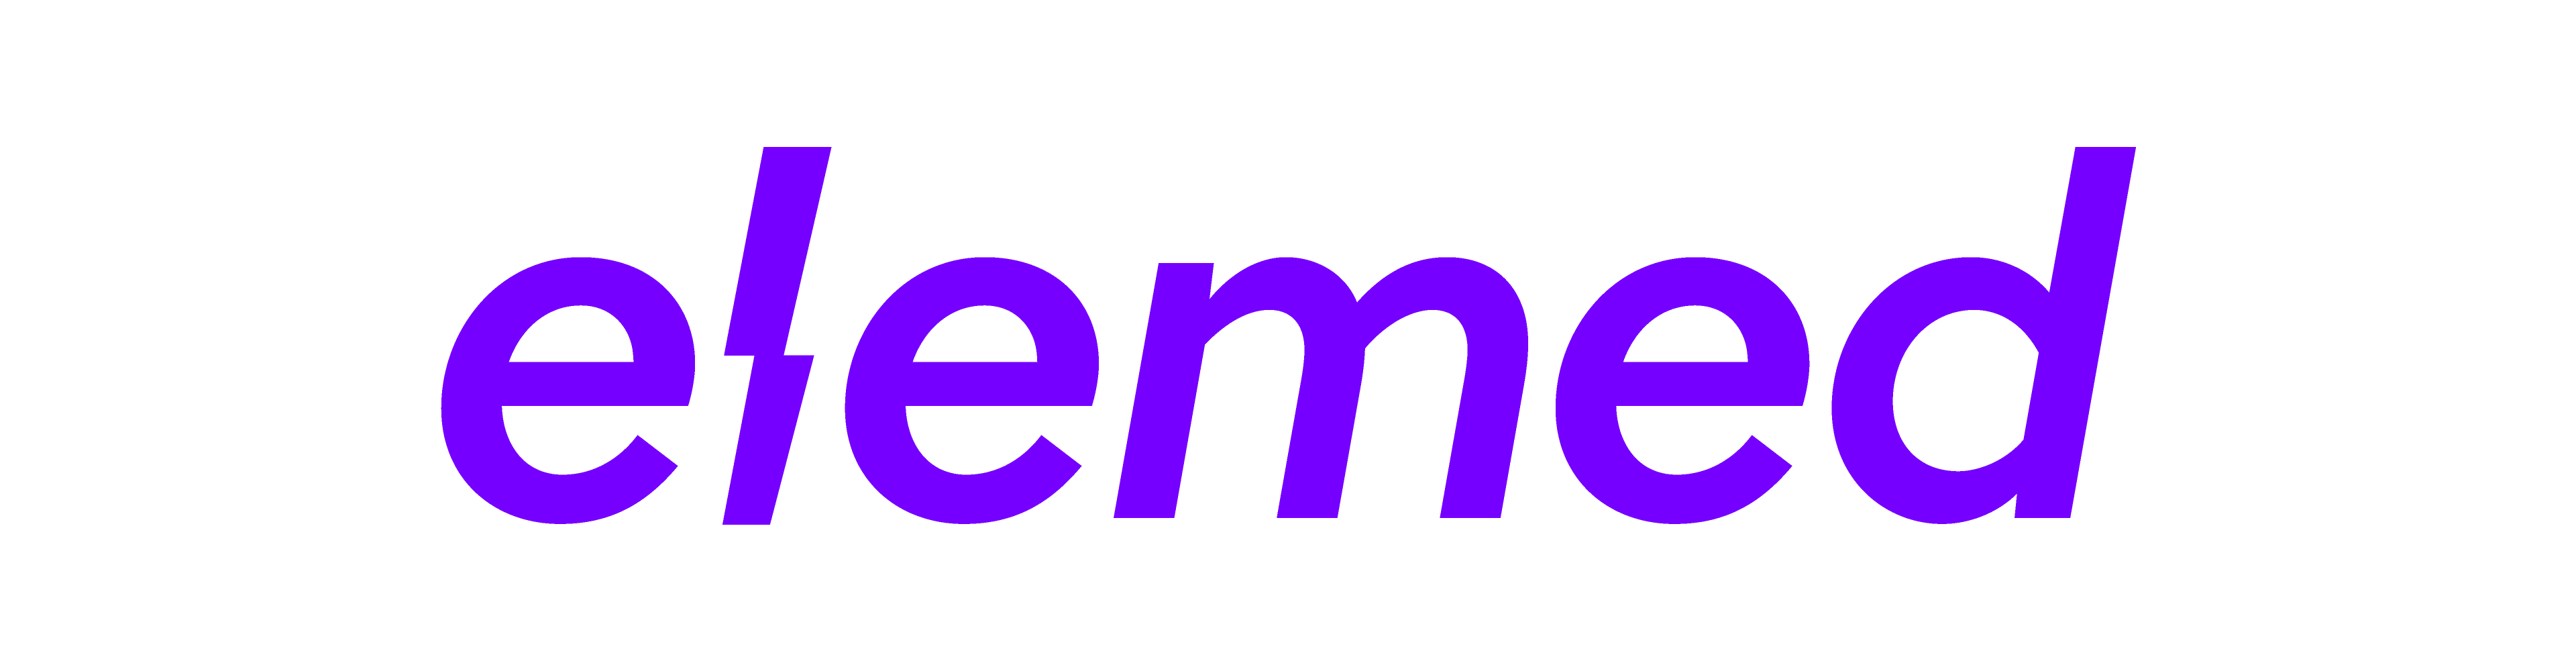 elemed_logo3